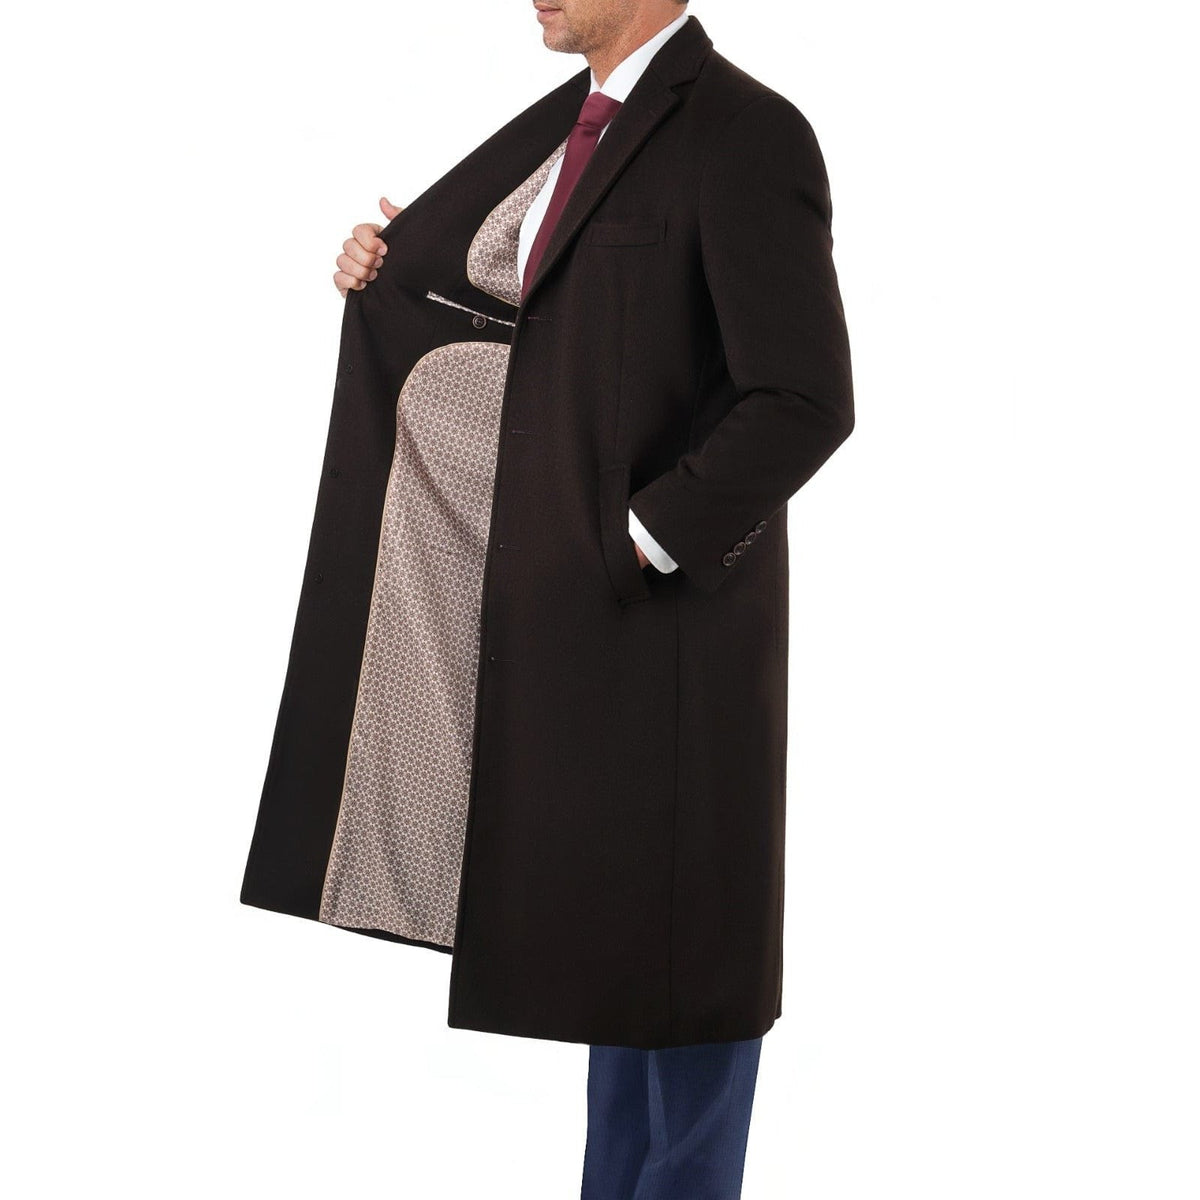 Arthur Black OUTERWEAR Mens Regular Fit Solid Dark Brown Full Length Wool Cashmere Overcoat Top Coat